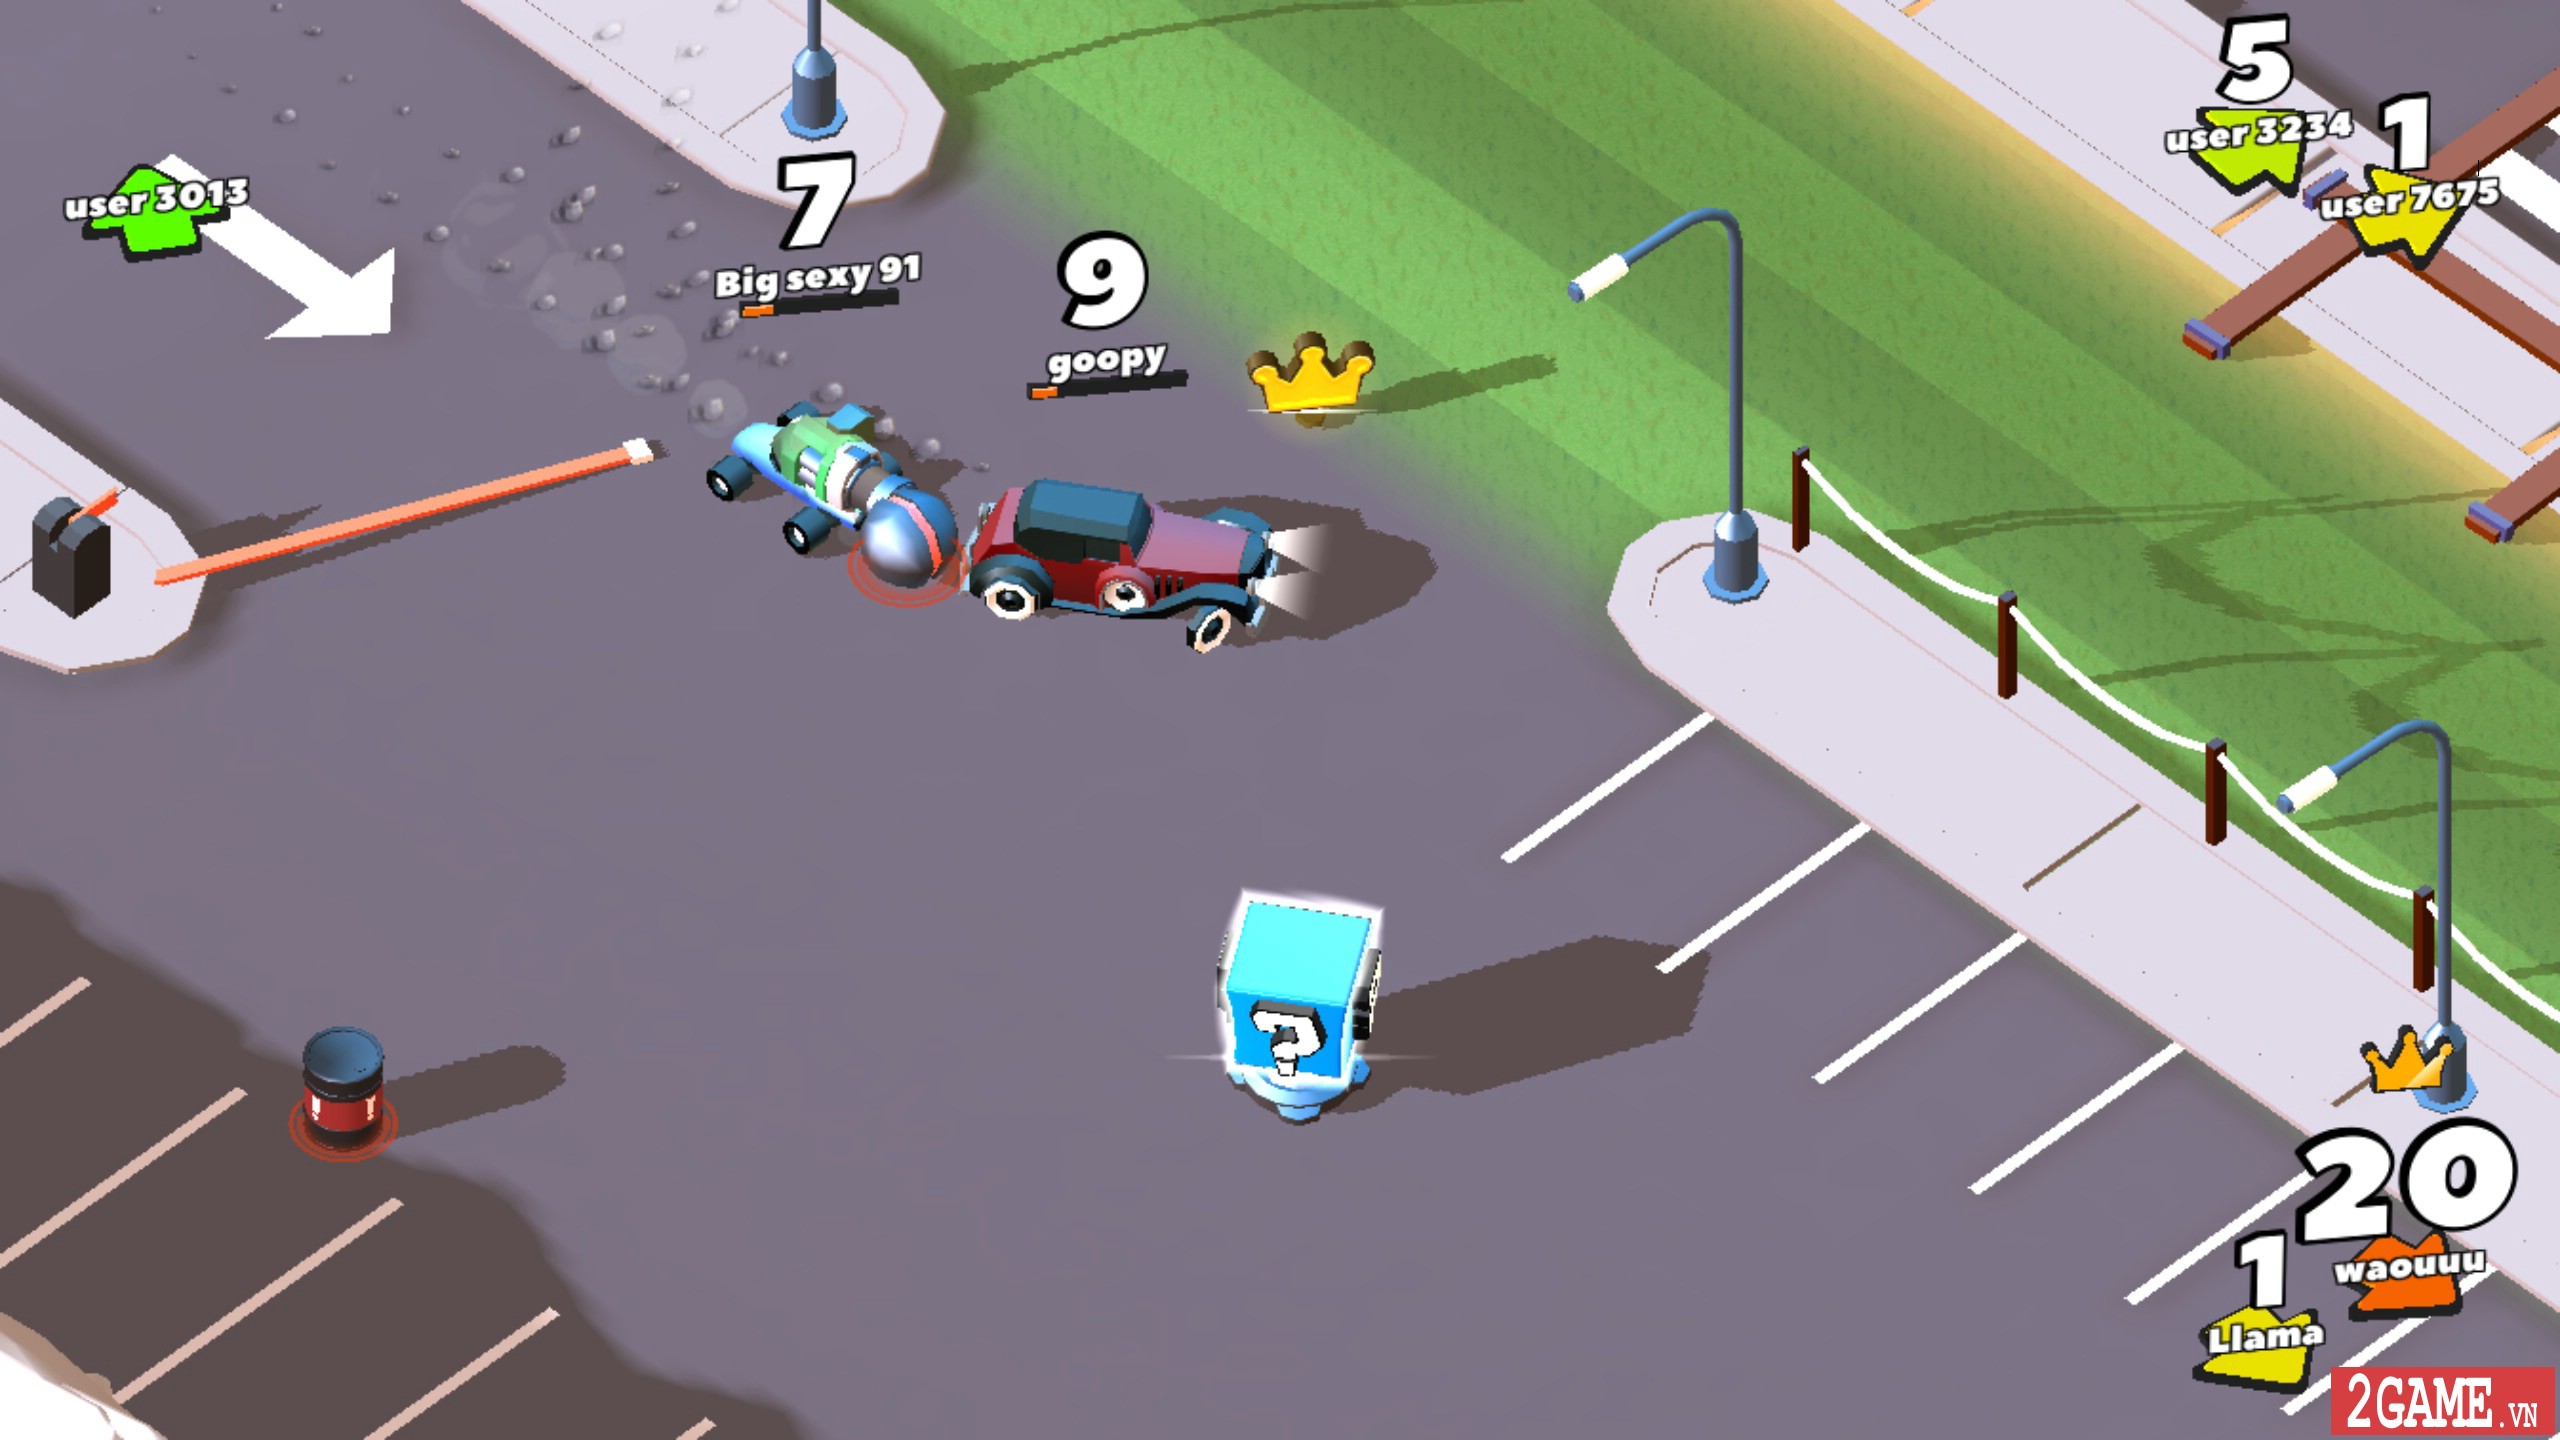 2game-Crash-of-Cars-mobile-4.jpg (2560×1440)